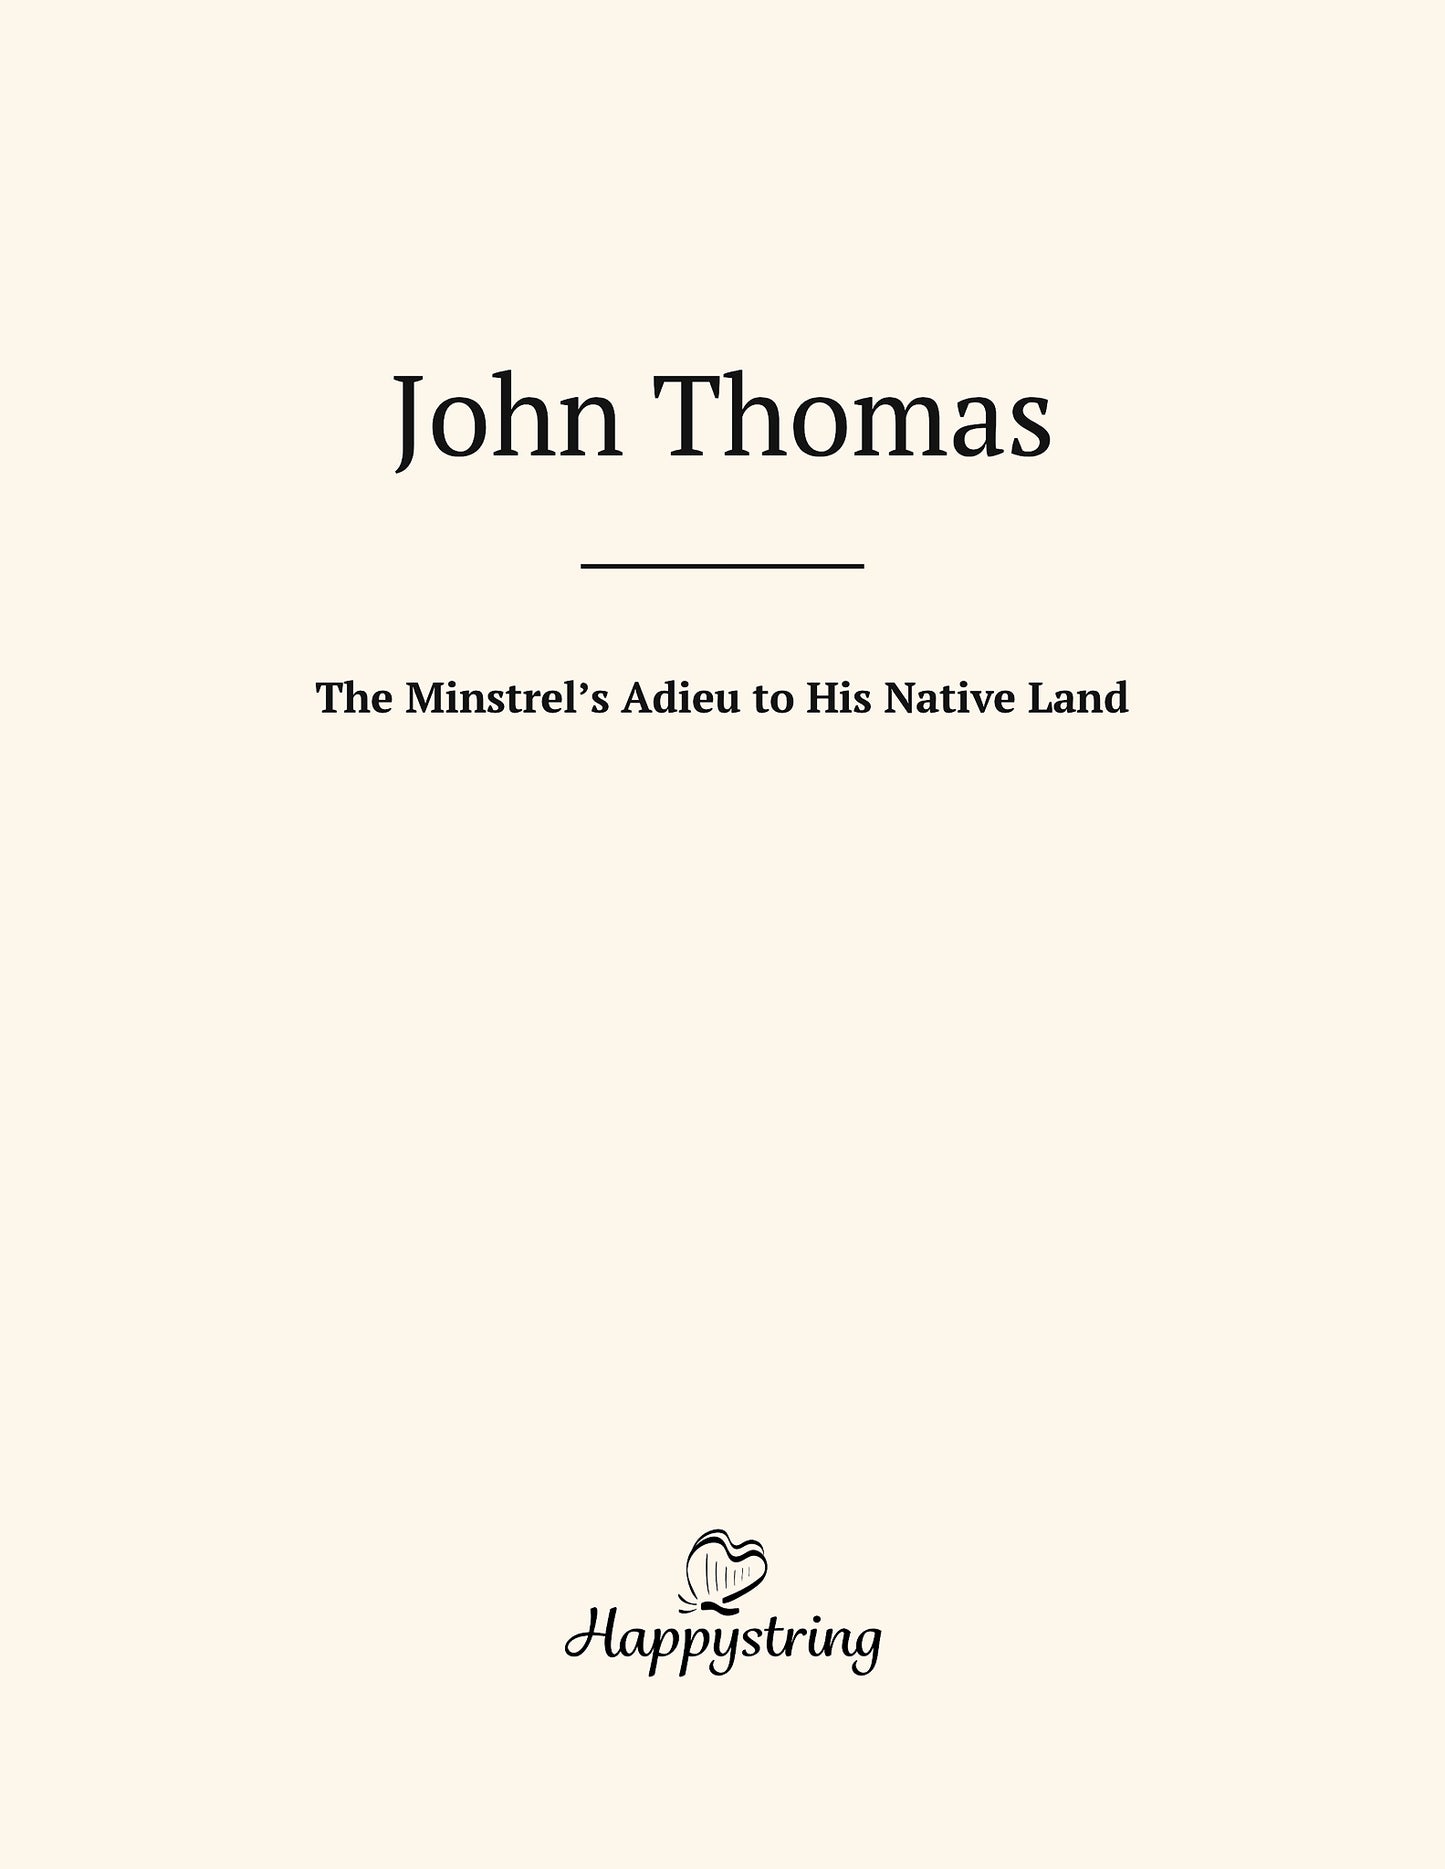 The Minstrel’s Adieu to His Native Land by John Thomas